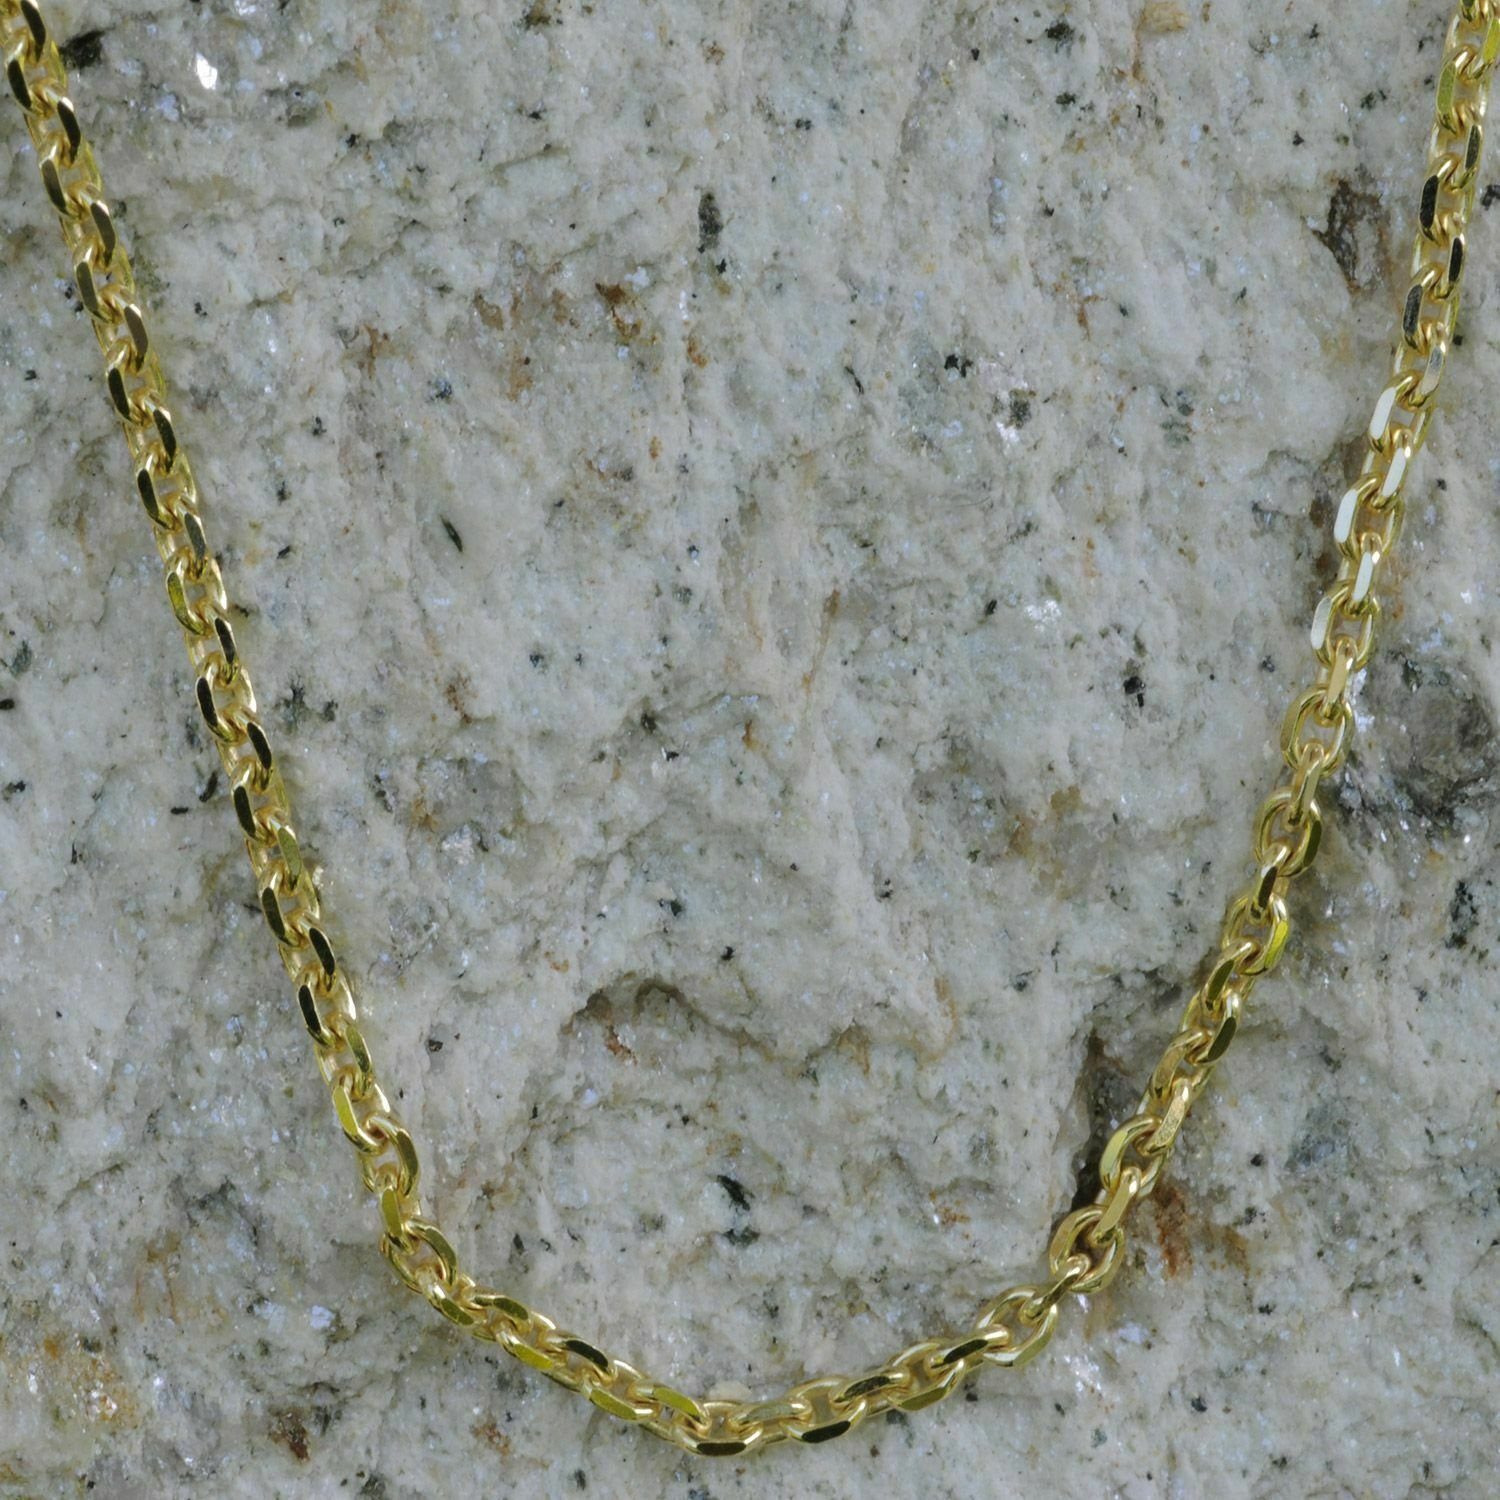 cm Germany Ankerkette 1,8 in Goldkette diamantiert - HOPLO Gold Kettenlänge 18 750 mm Made Karat 45 (inkl. Schmuckbox),